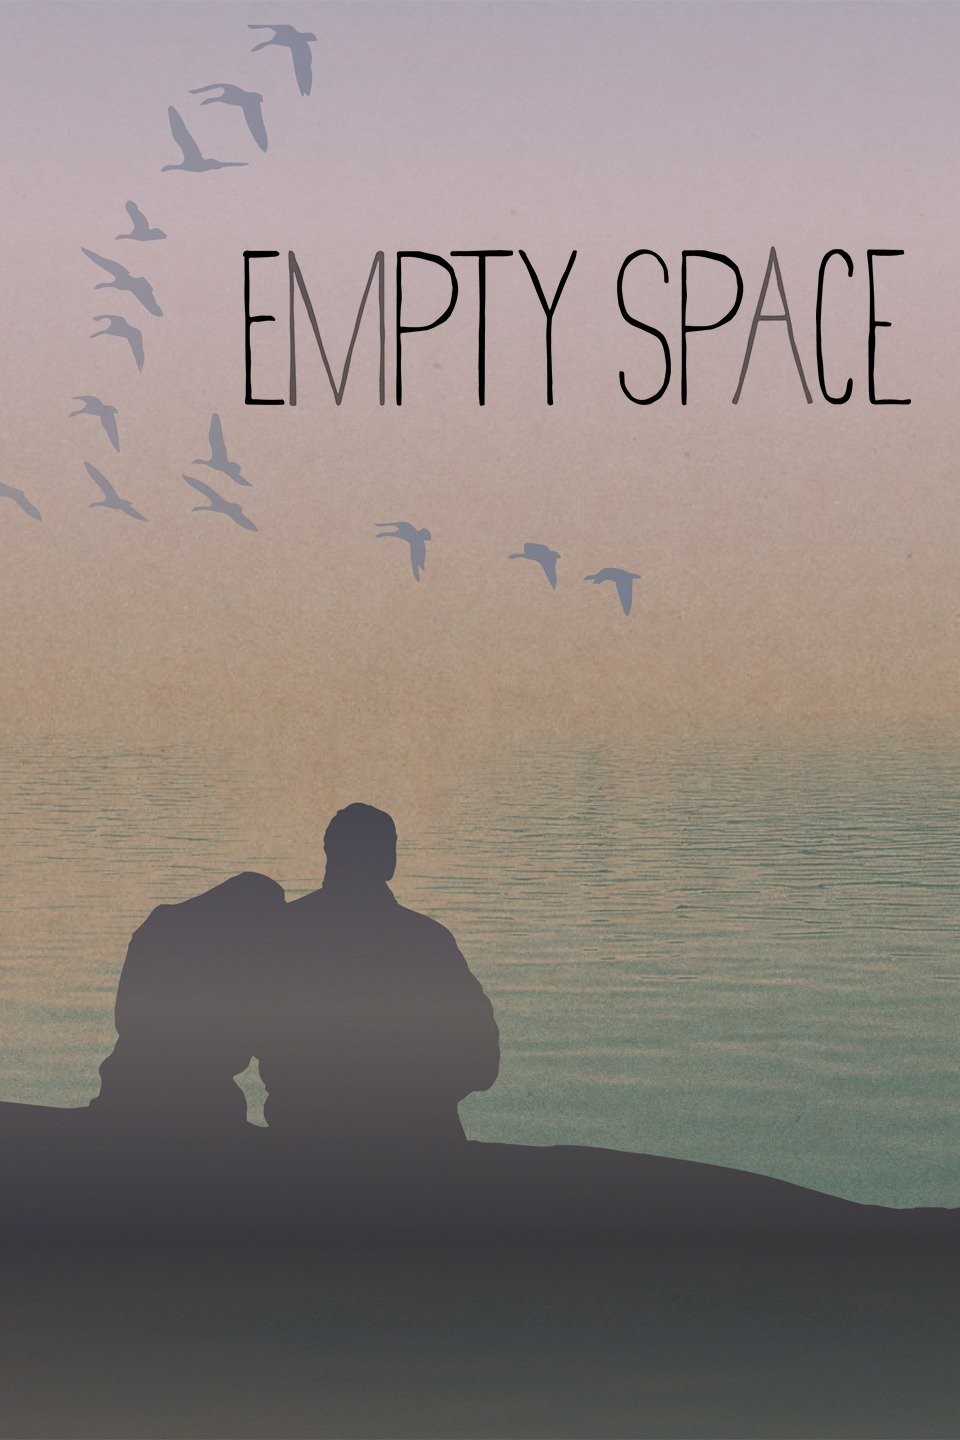 empty space quotes